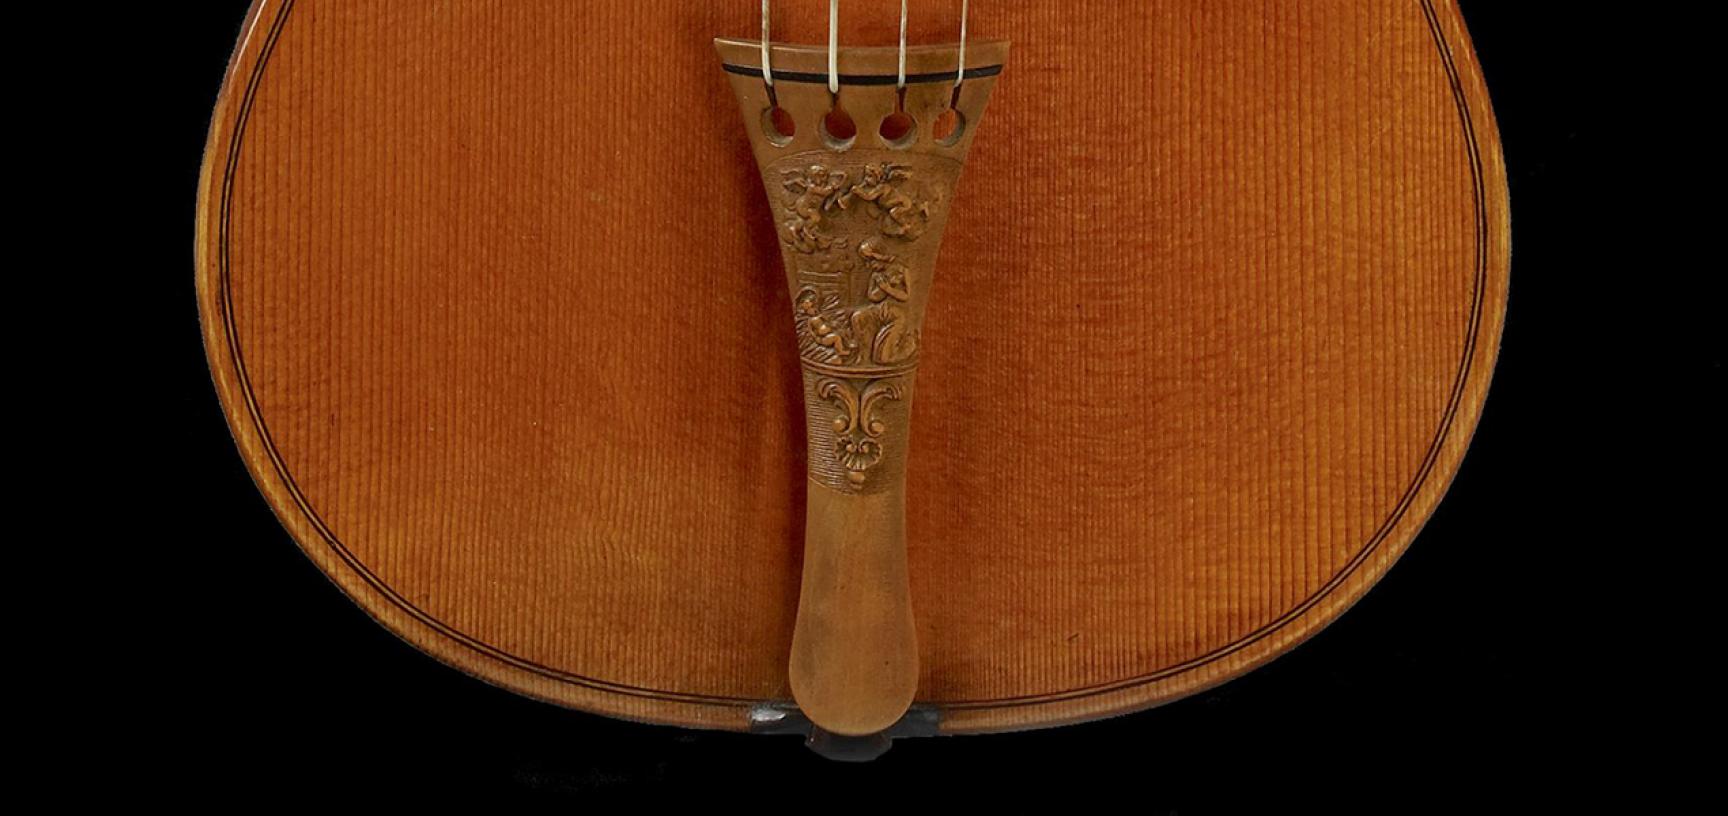 The â€˜Messiahâ€™ Violin by Antonio Stradivari (detail)